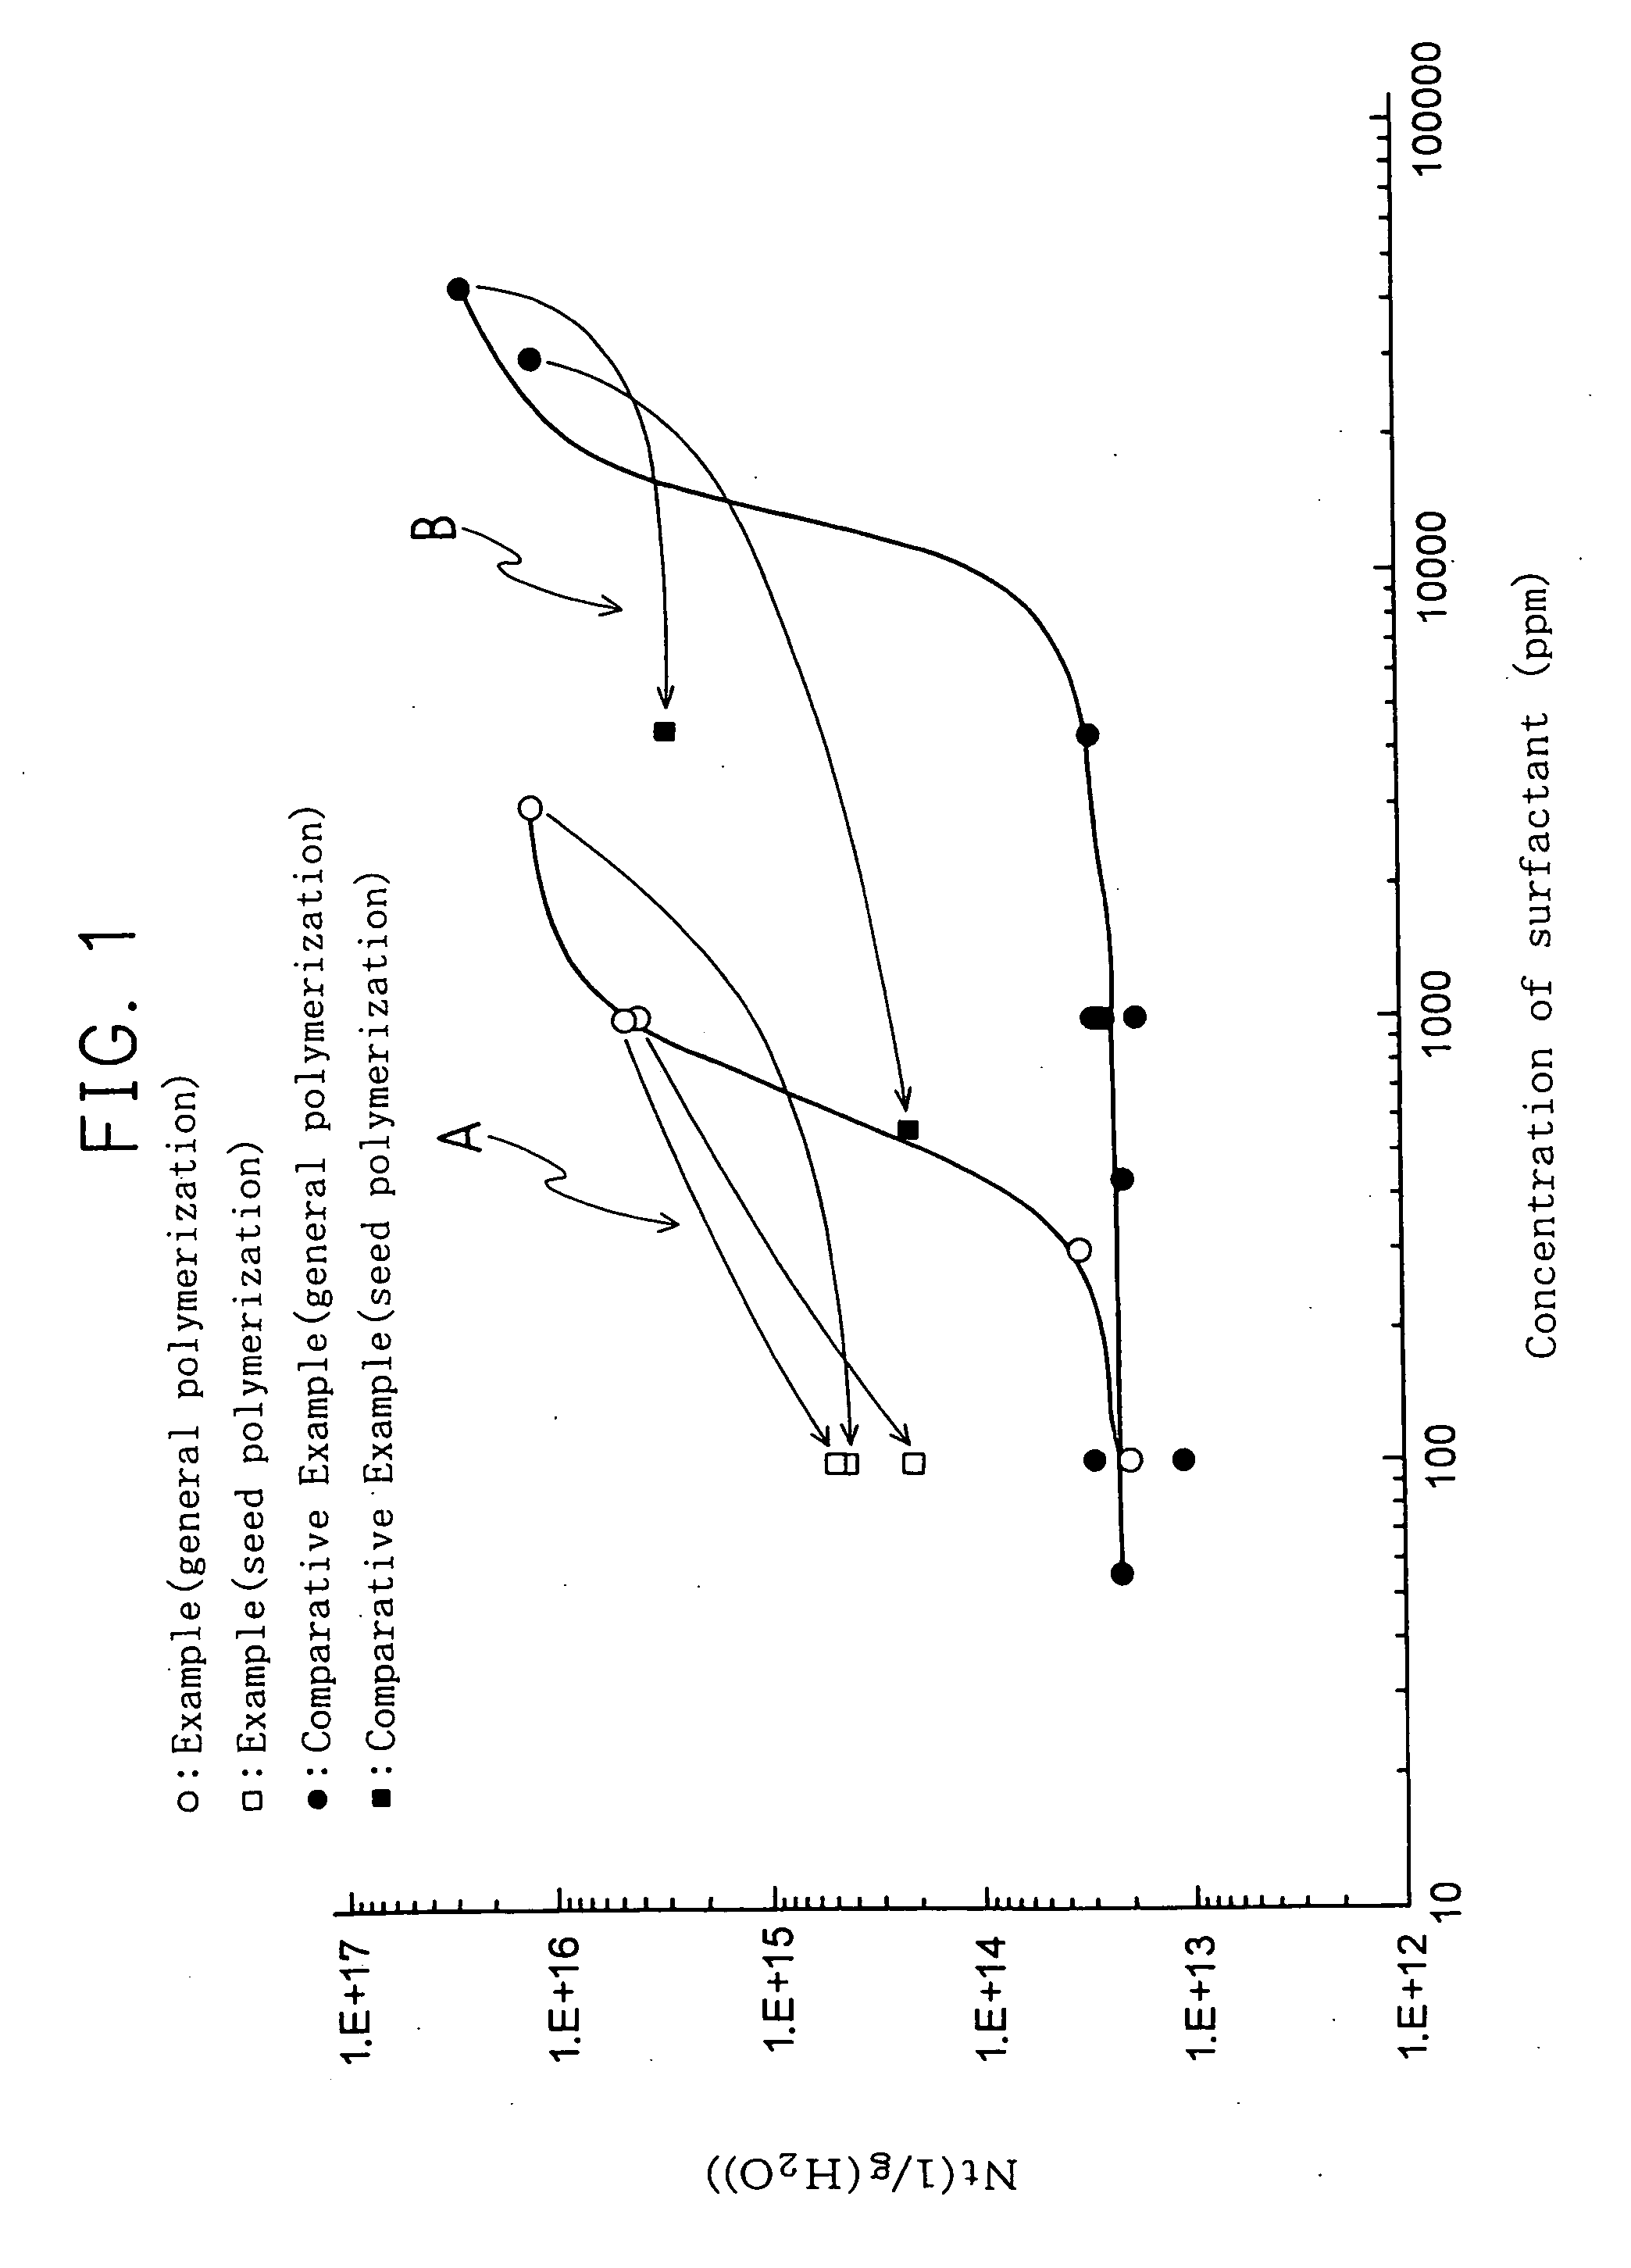 Process for preparing fluoropolymer